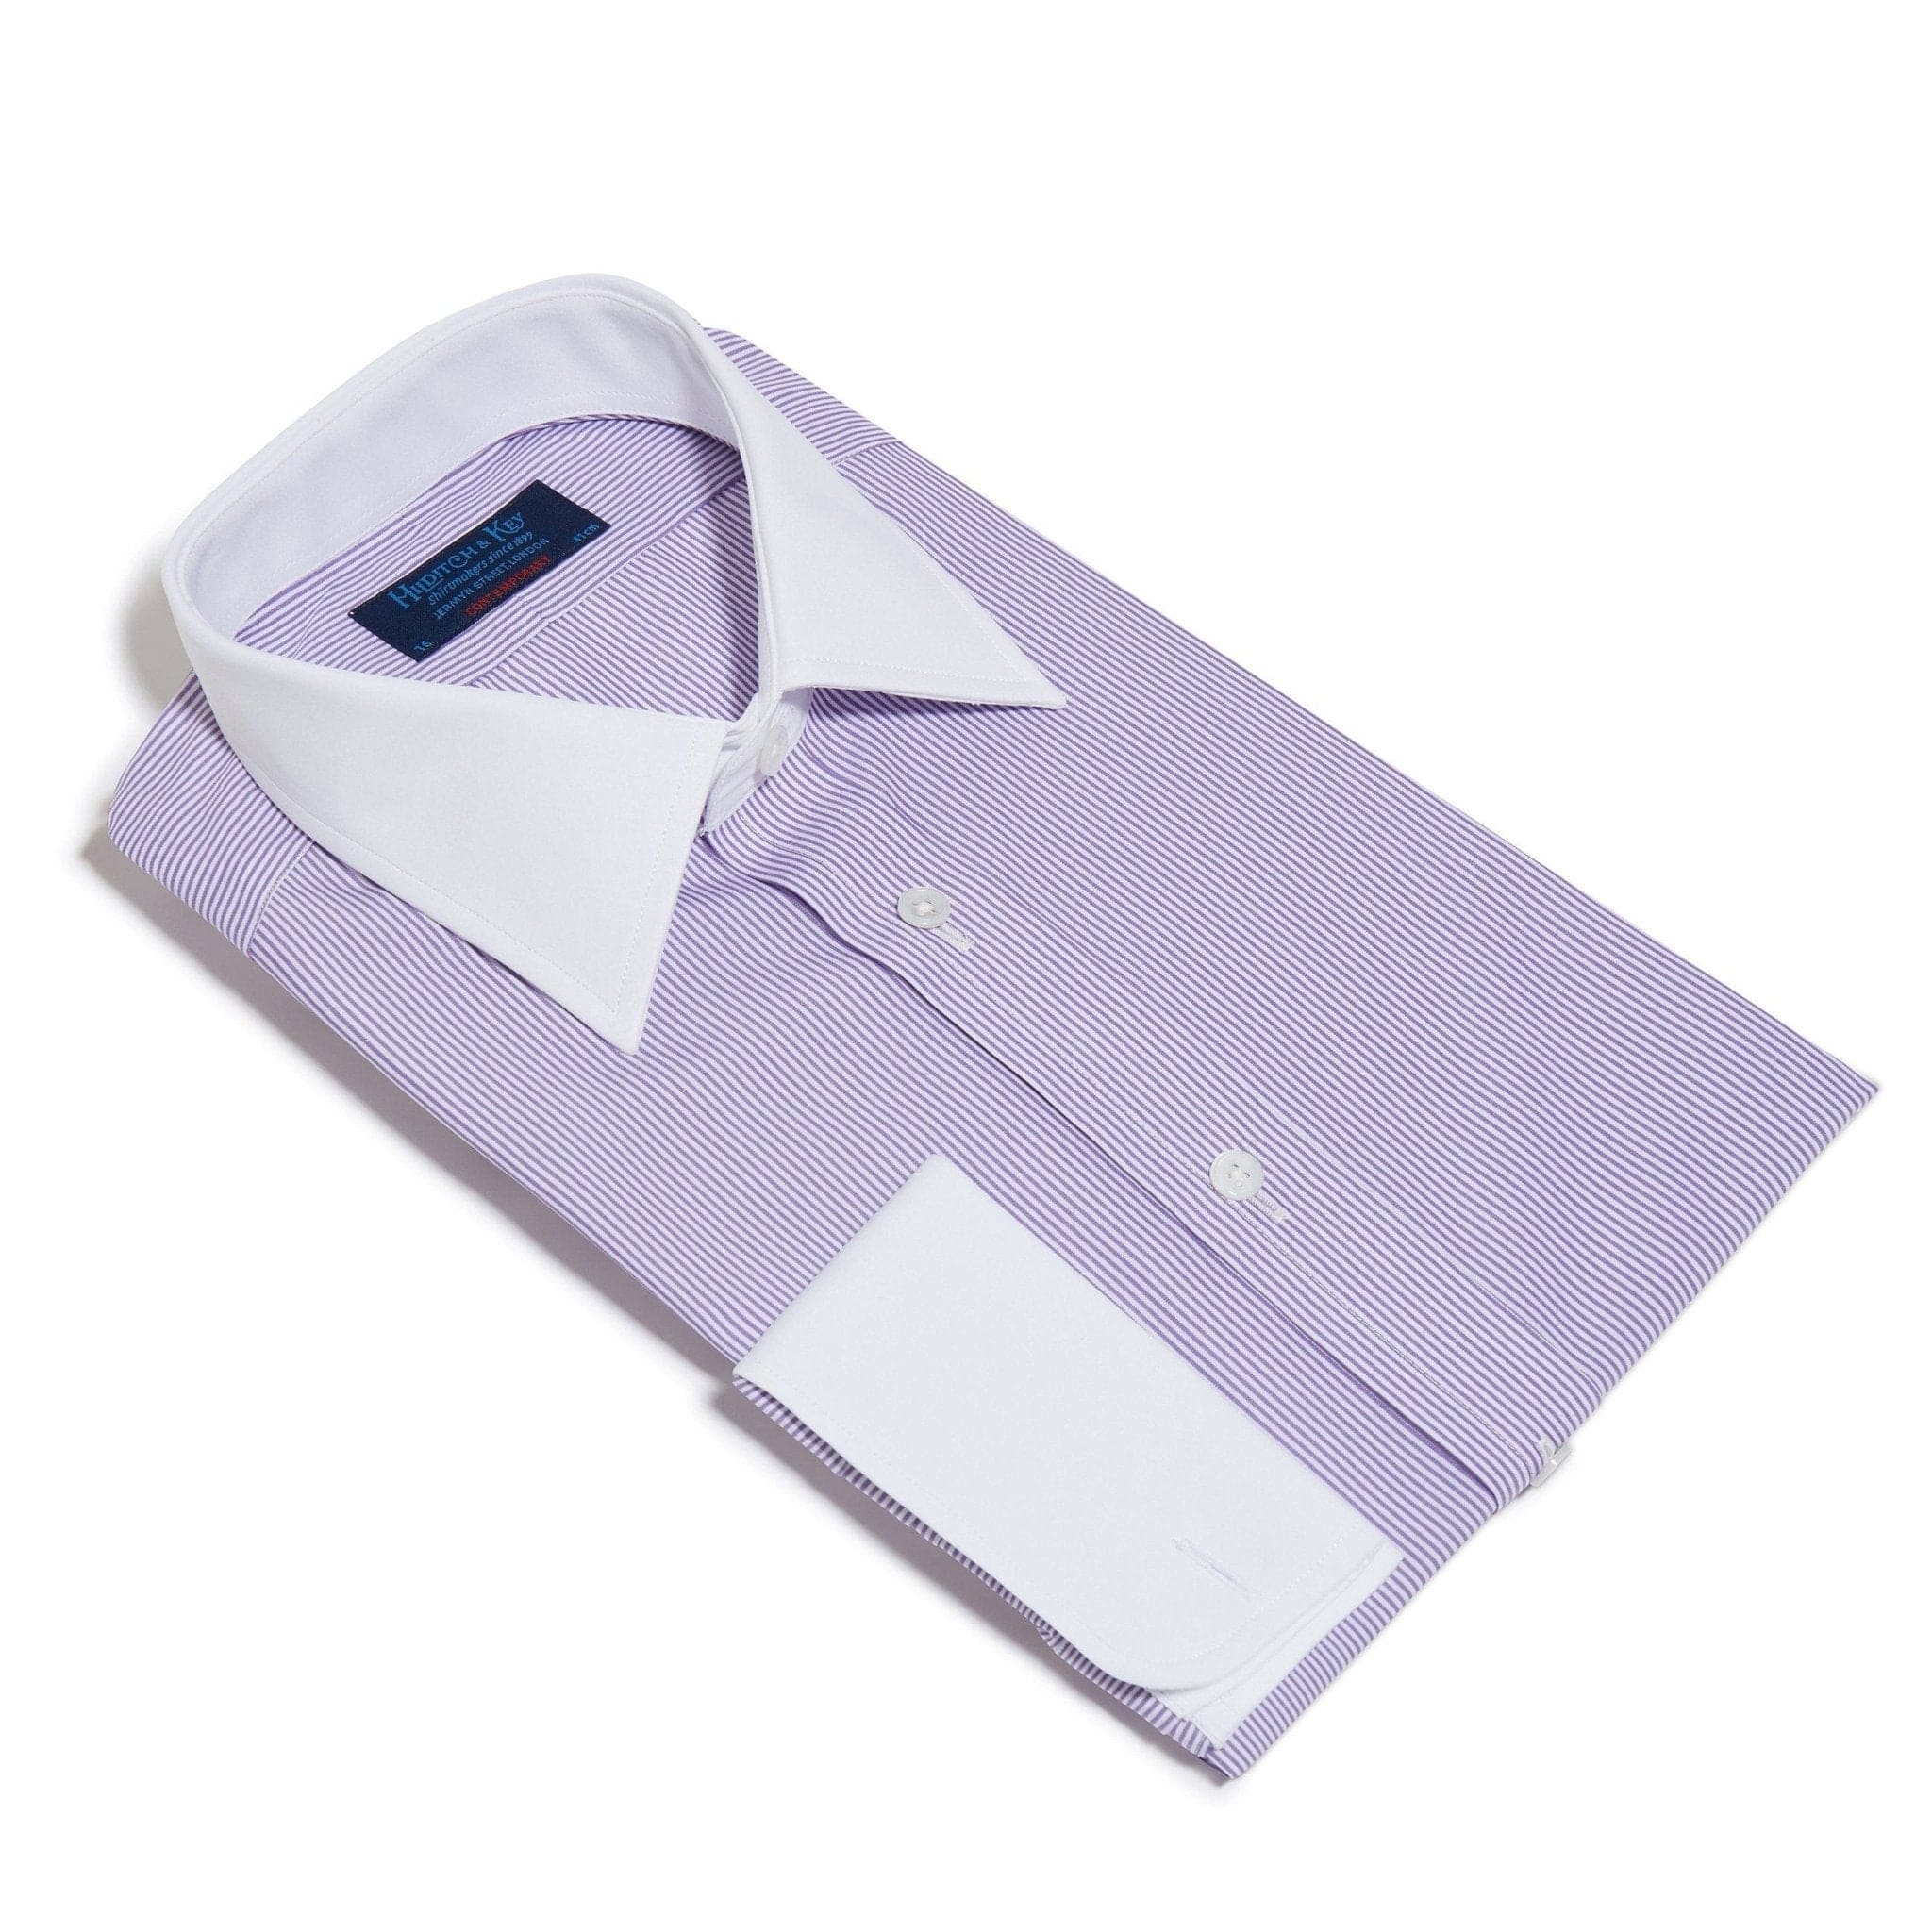 Contemporary Fit, White Classic Collar, White Double Cuff Shirt in a Purple & White Bengal Stripe Poplin Cotton